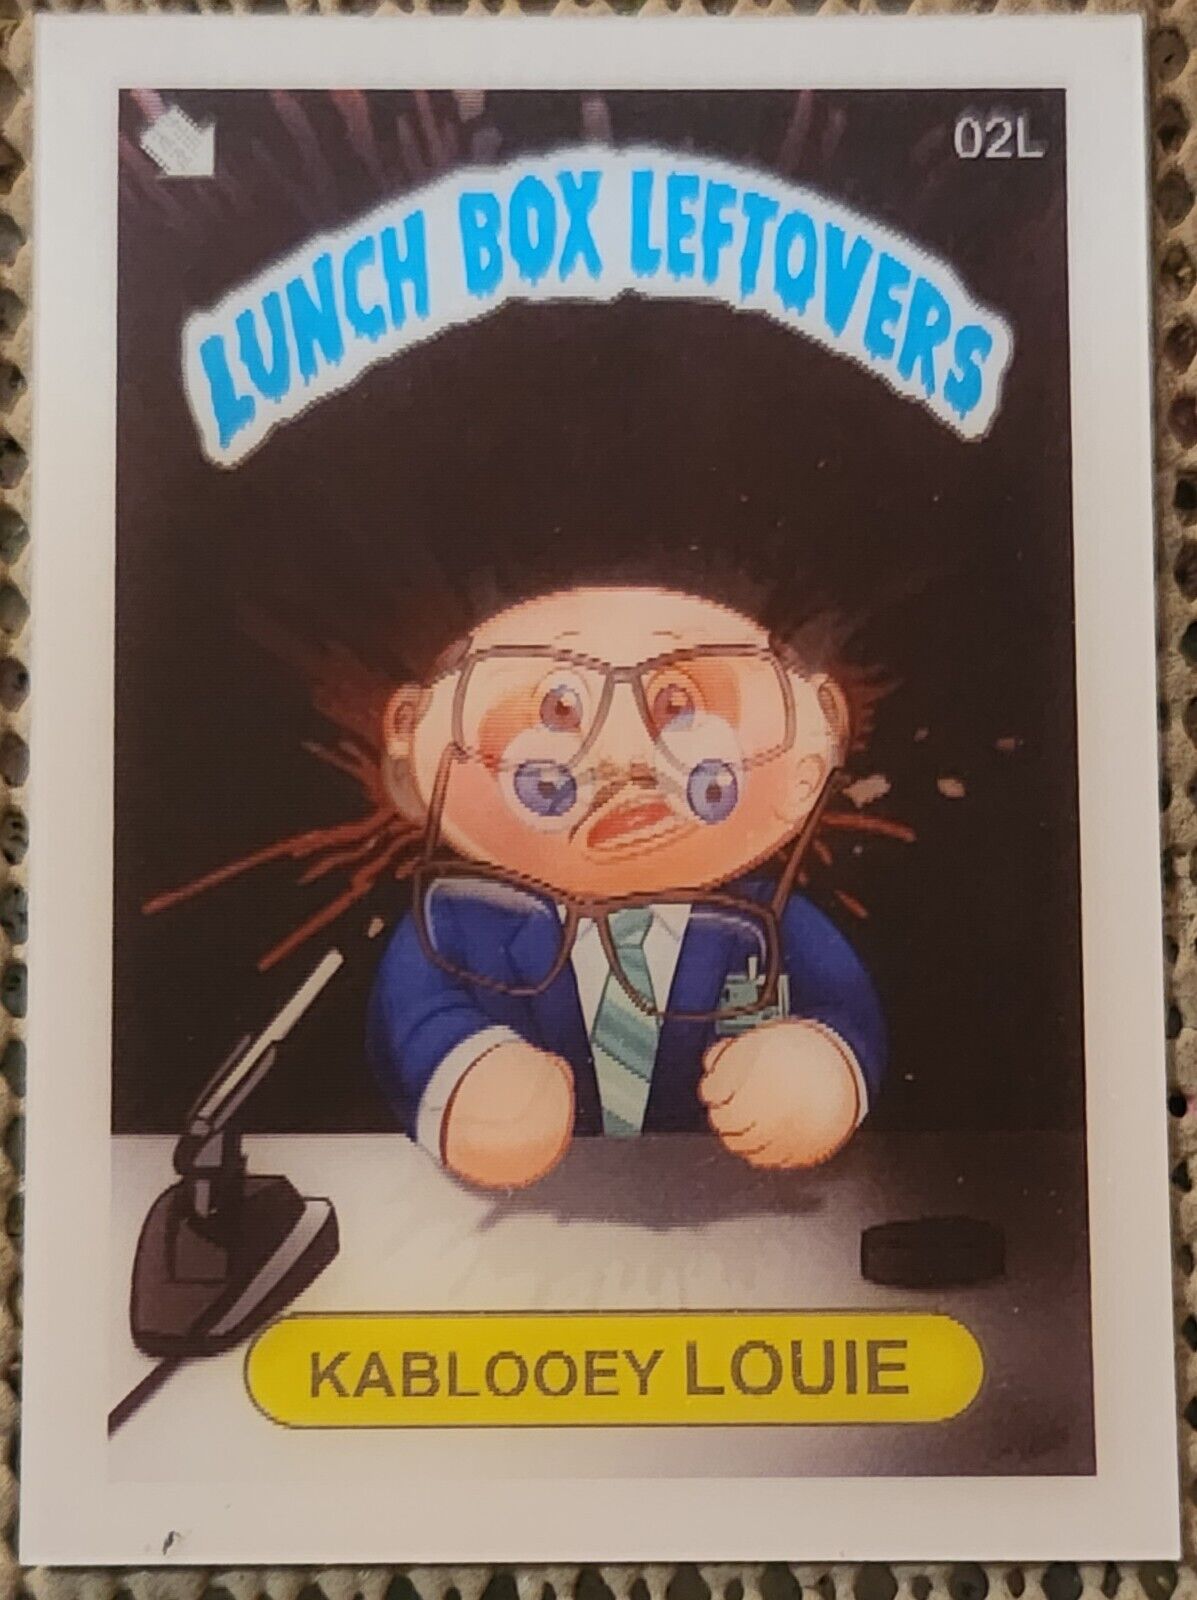 KABLOOEY LOUIE:: LUNCH BOX LEFTOVERS SSFC Series 3 SP (#02L) LENTICULAR 